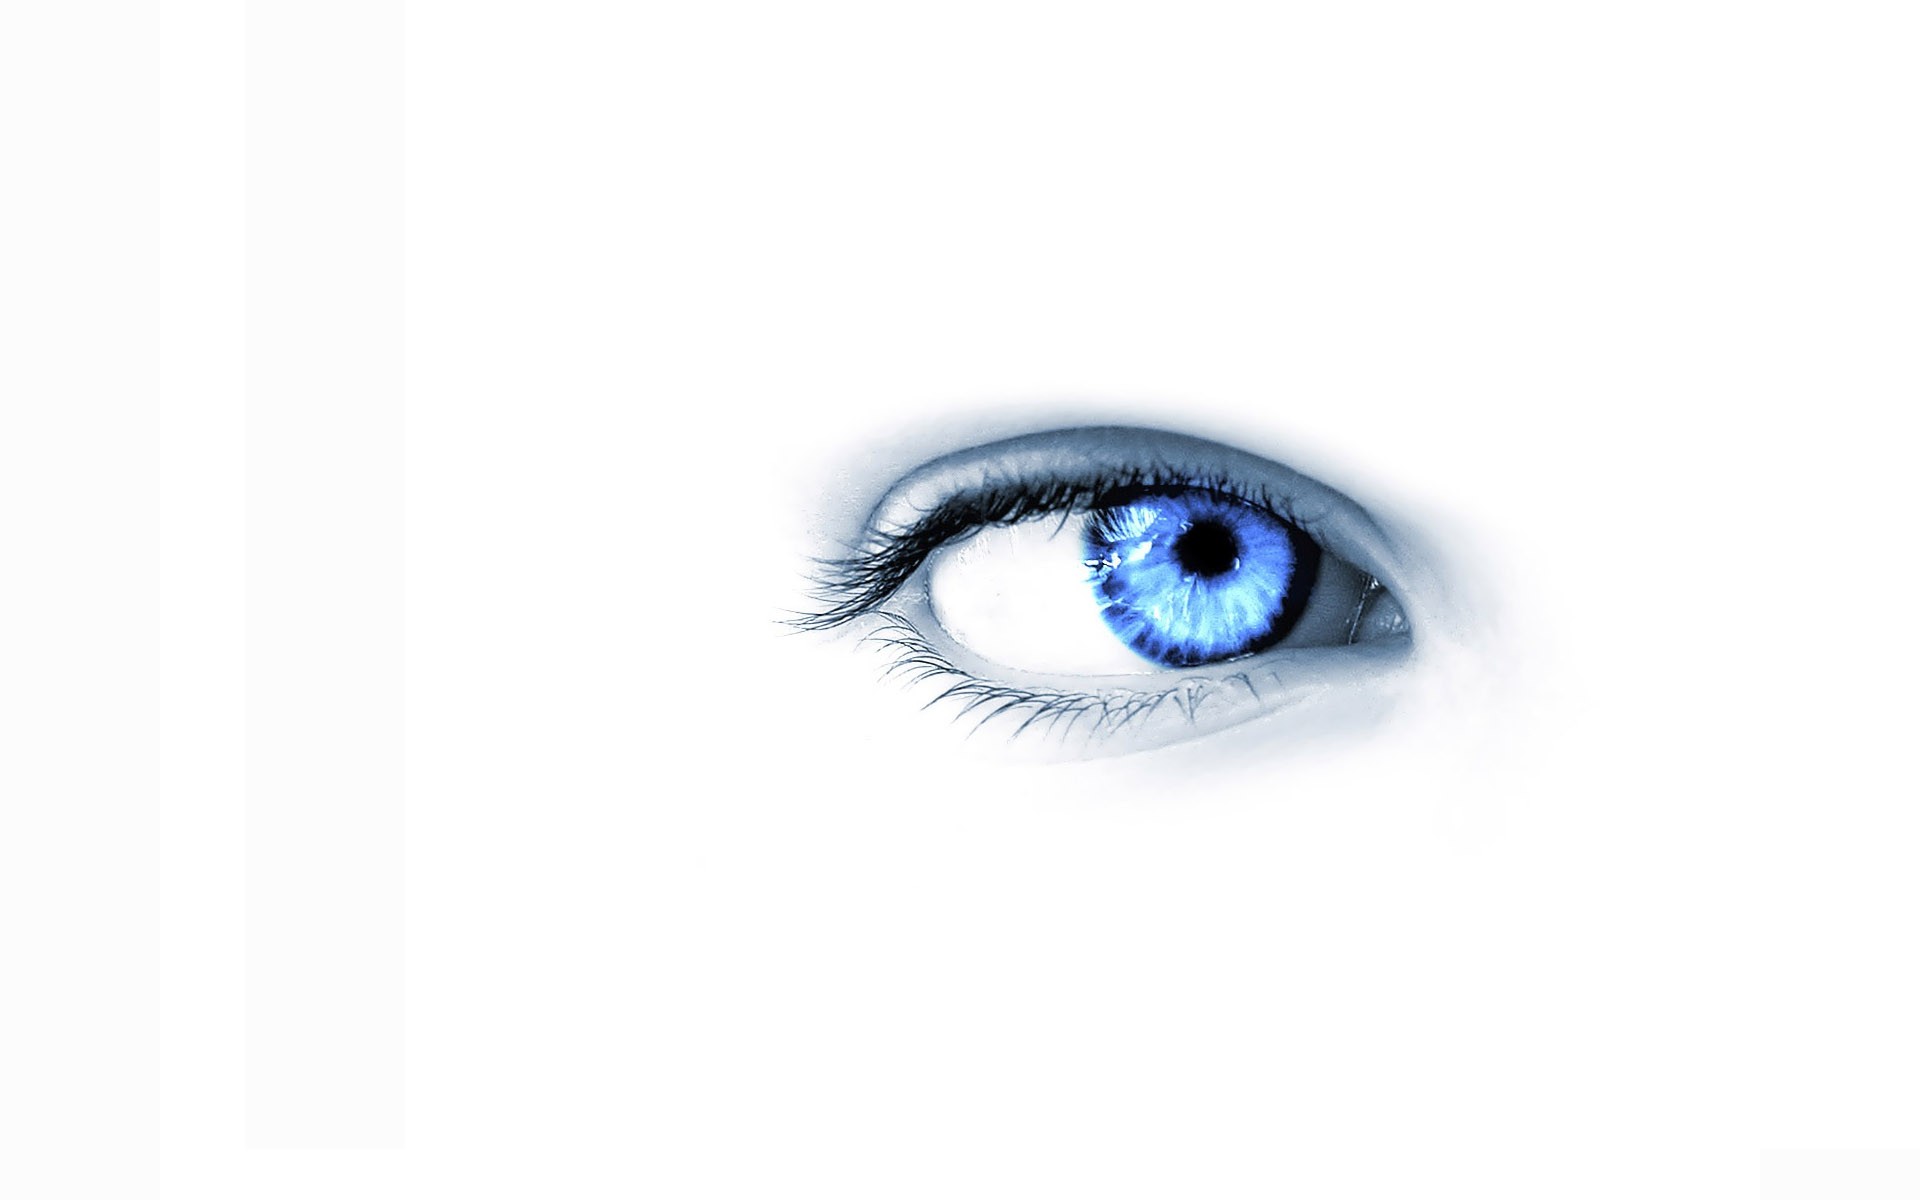 Wallpaper, eyes, glasses, violet, blue, eye, 1920x1200 px, human body, vision care, organ, eyelash, contact lens 1920x1200